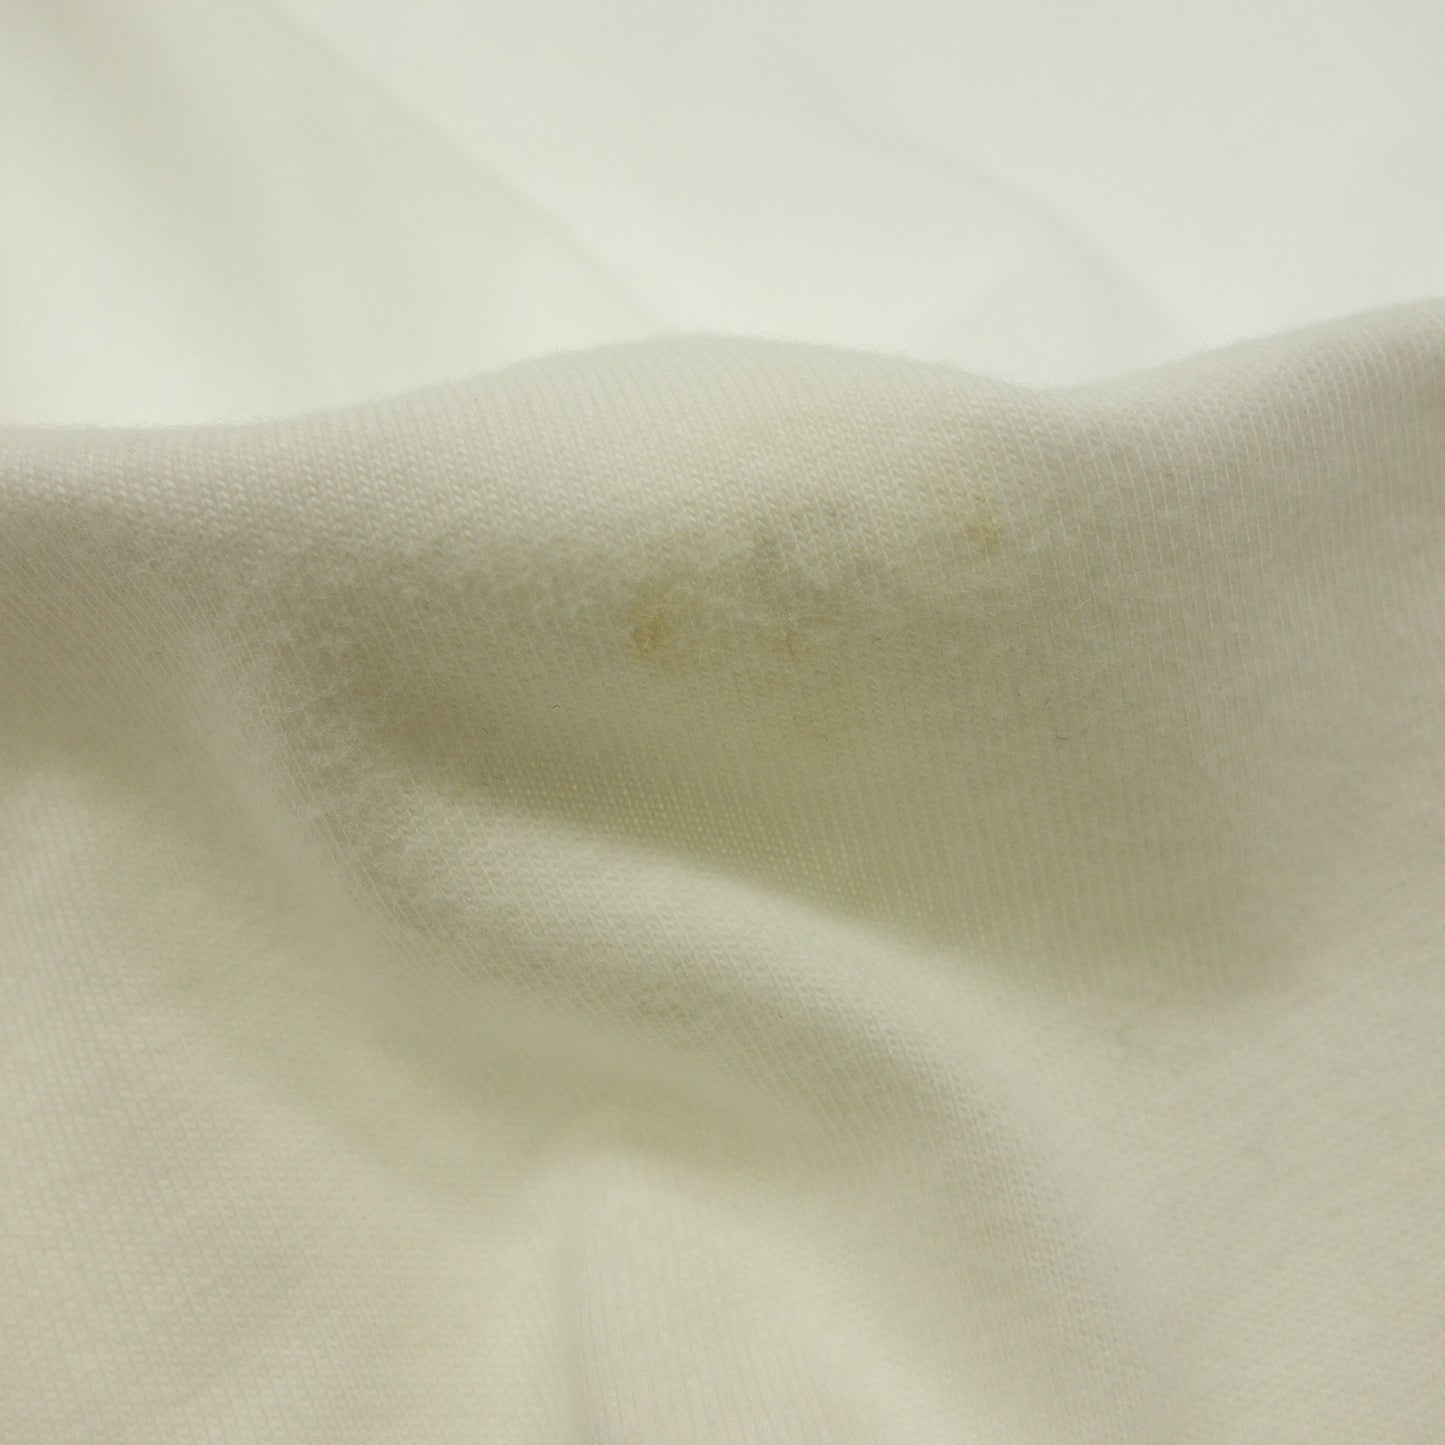 状况良好◆Moncler 带口袋棉质 T 恤 2019 男式 M 码 白色 MONCLER MAGLIA [AFB3] 